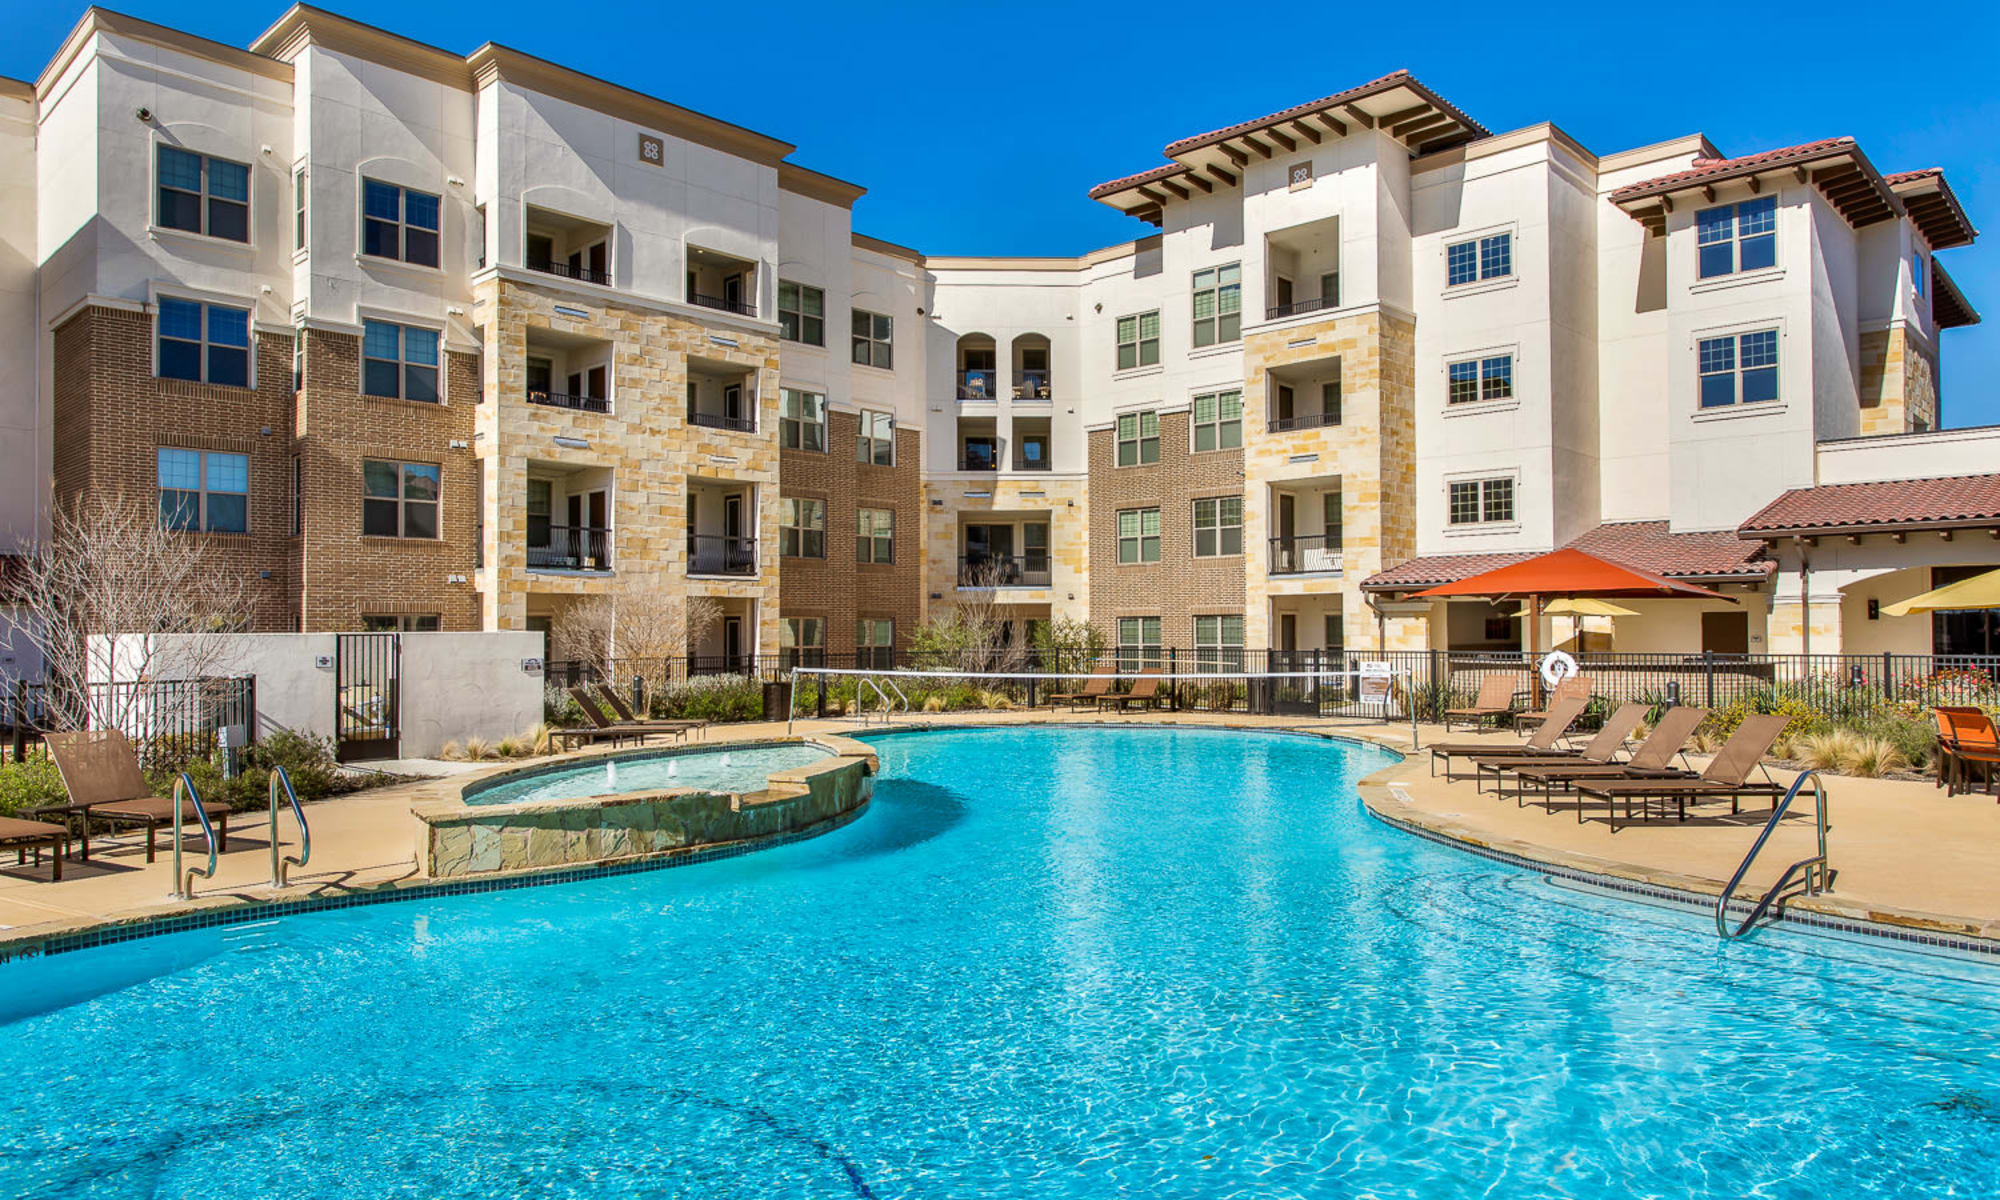 Apartments at Villas at the Rim in San Antonio, Texas